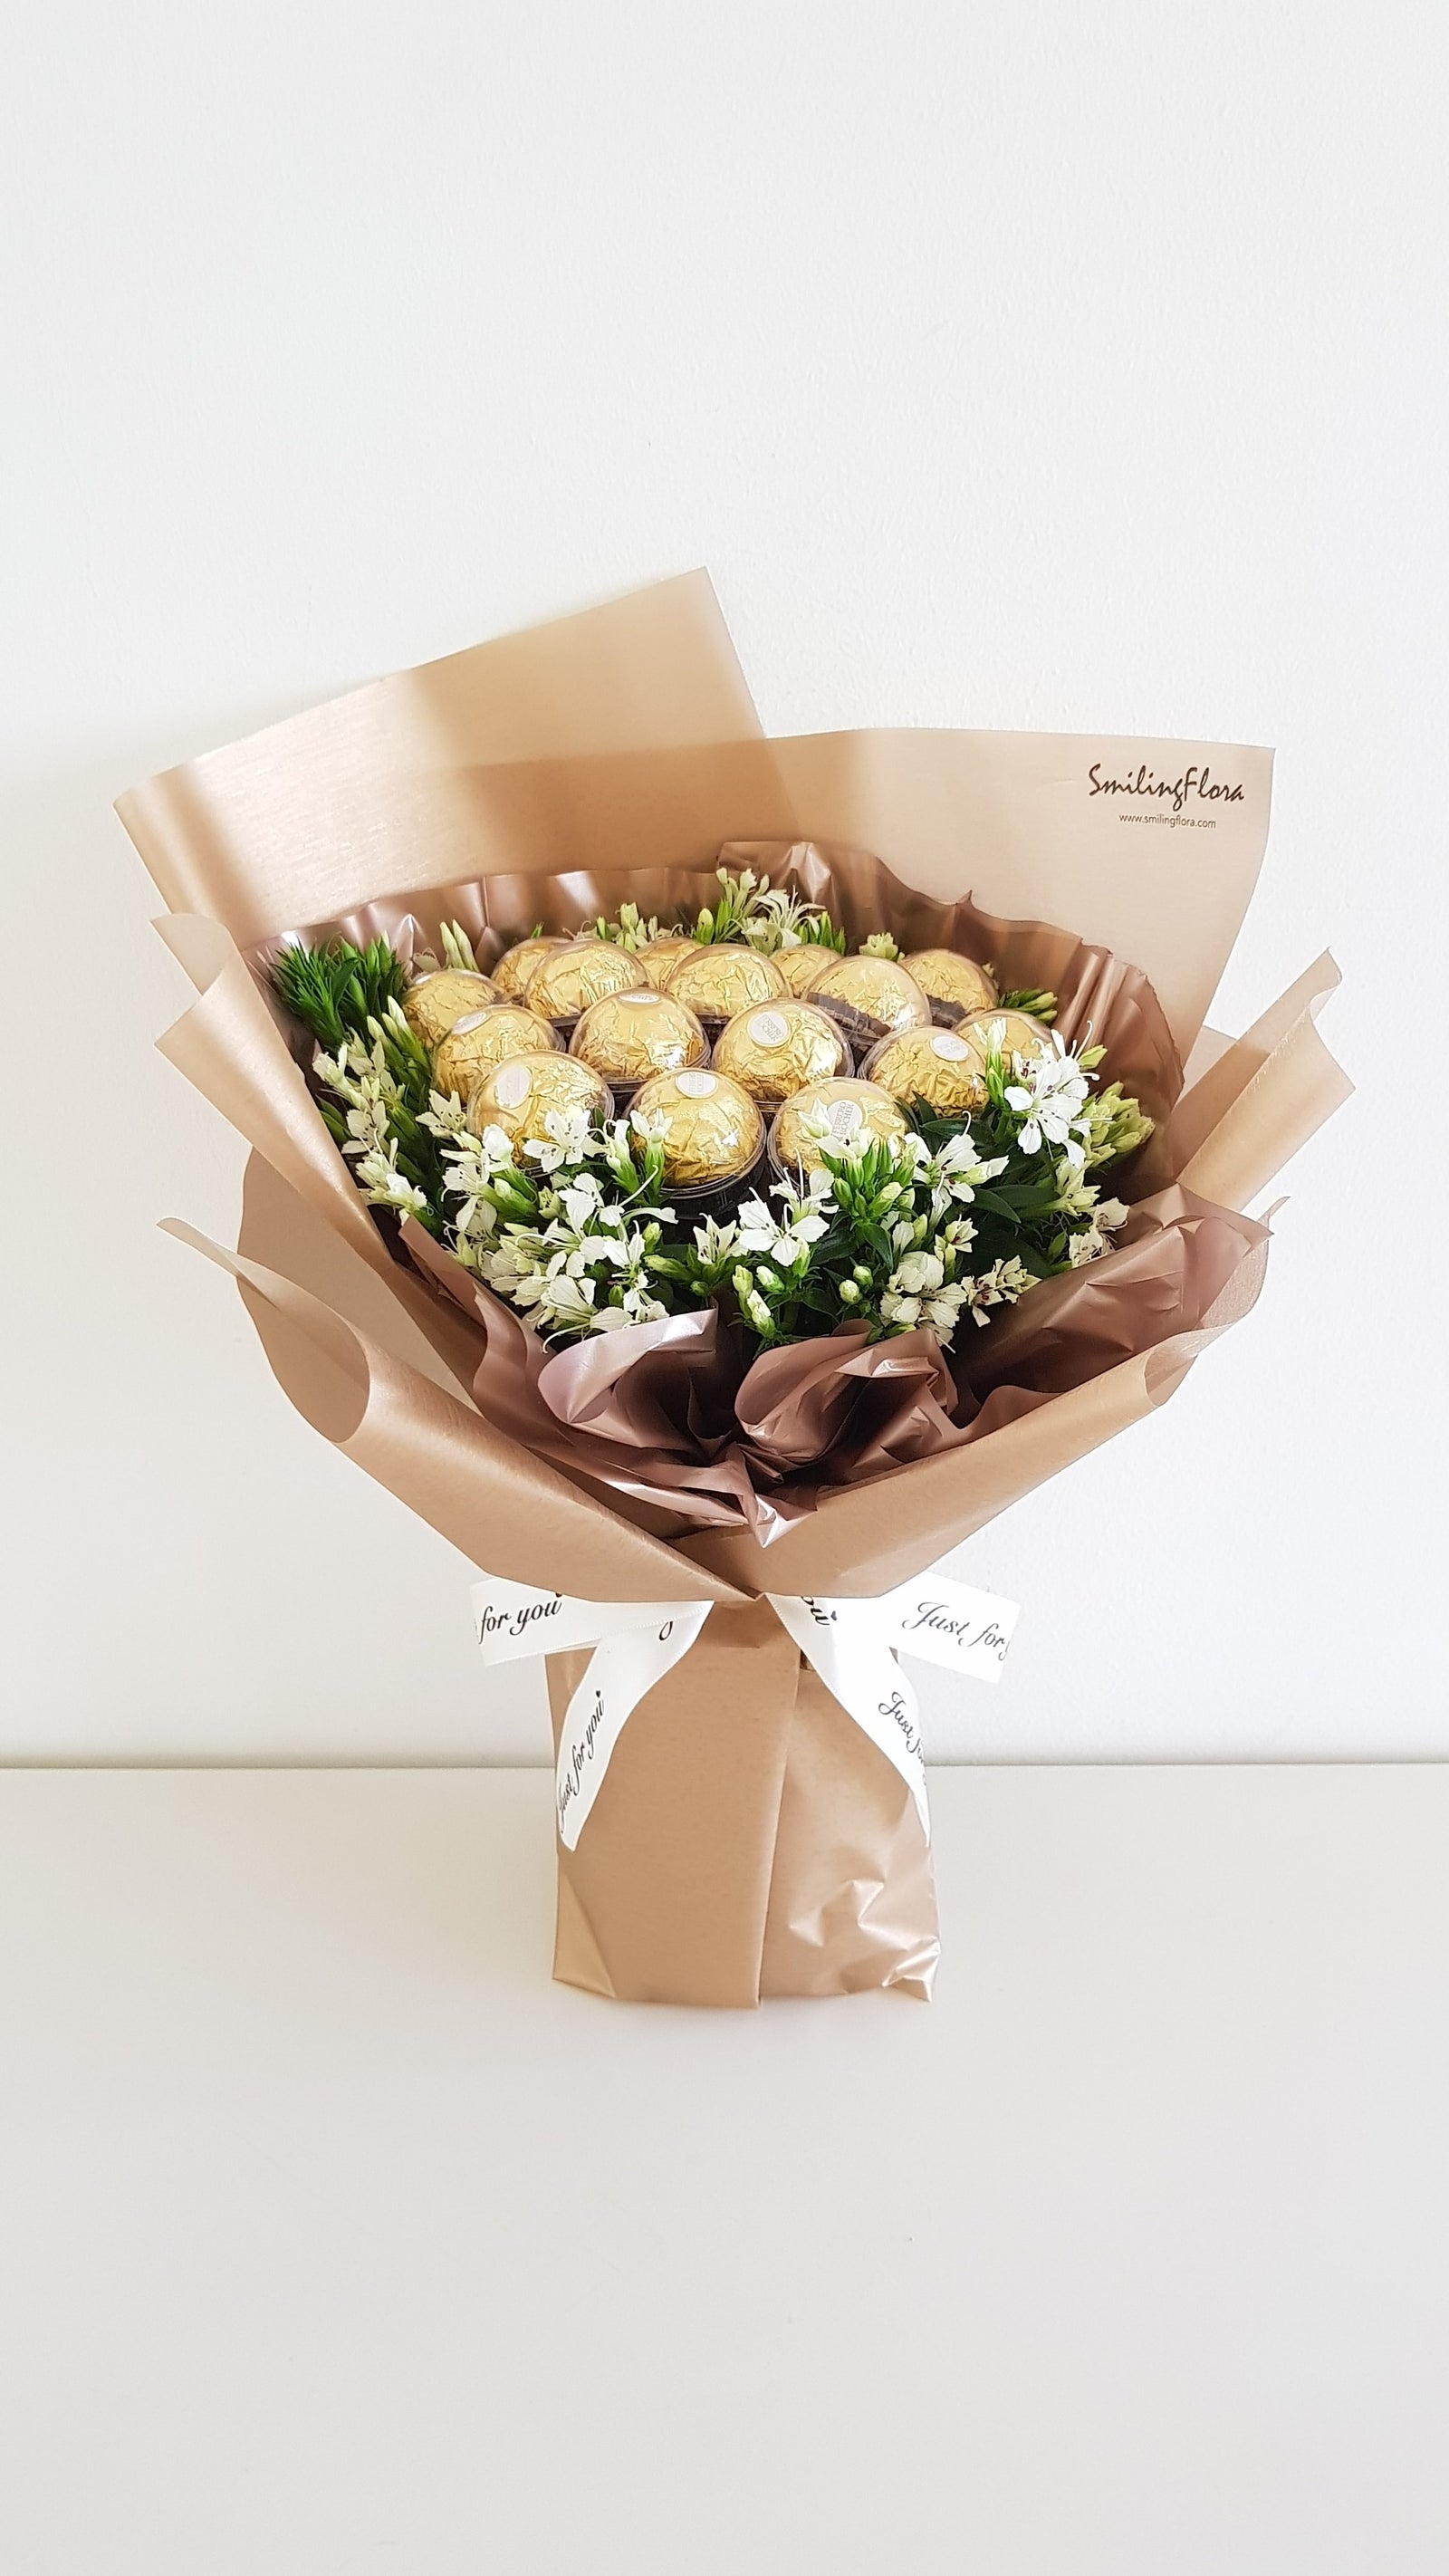 flowers for men's birthday singapore